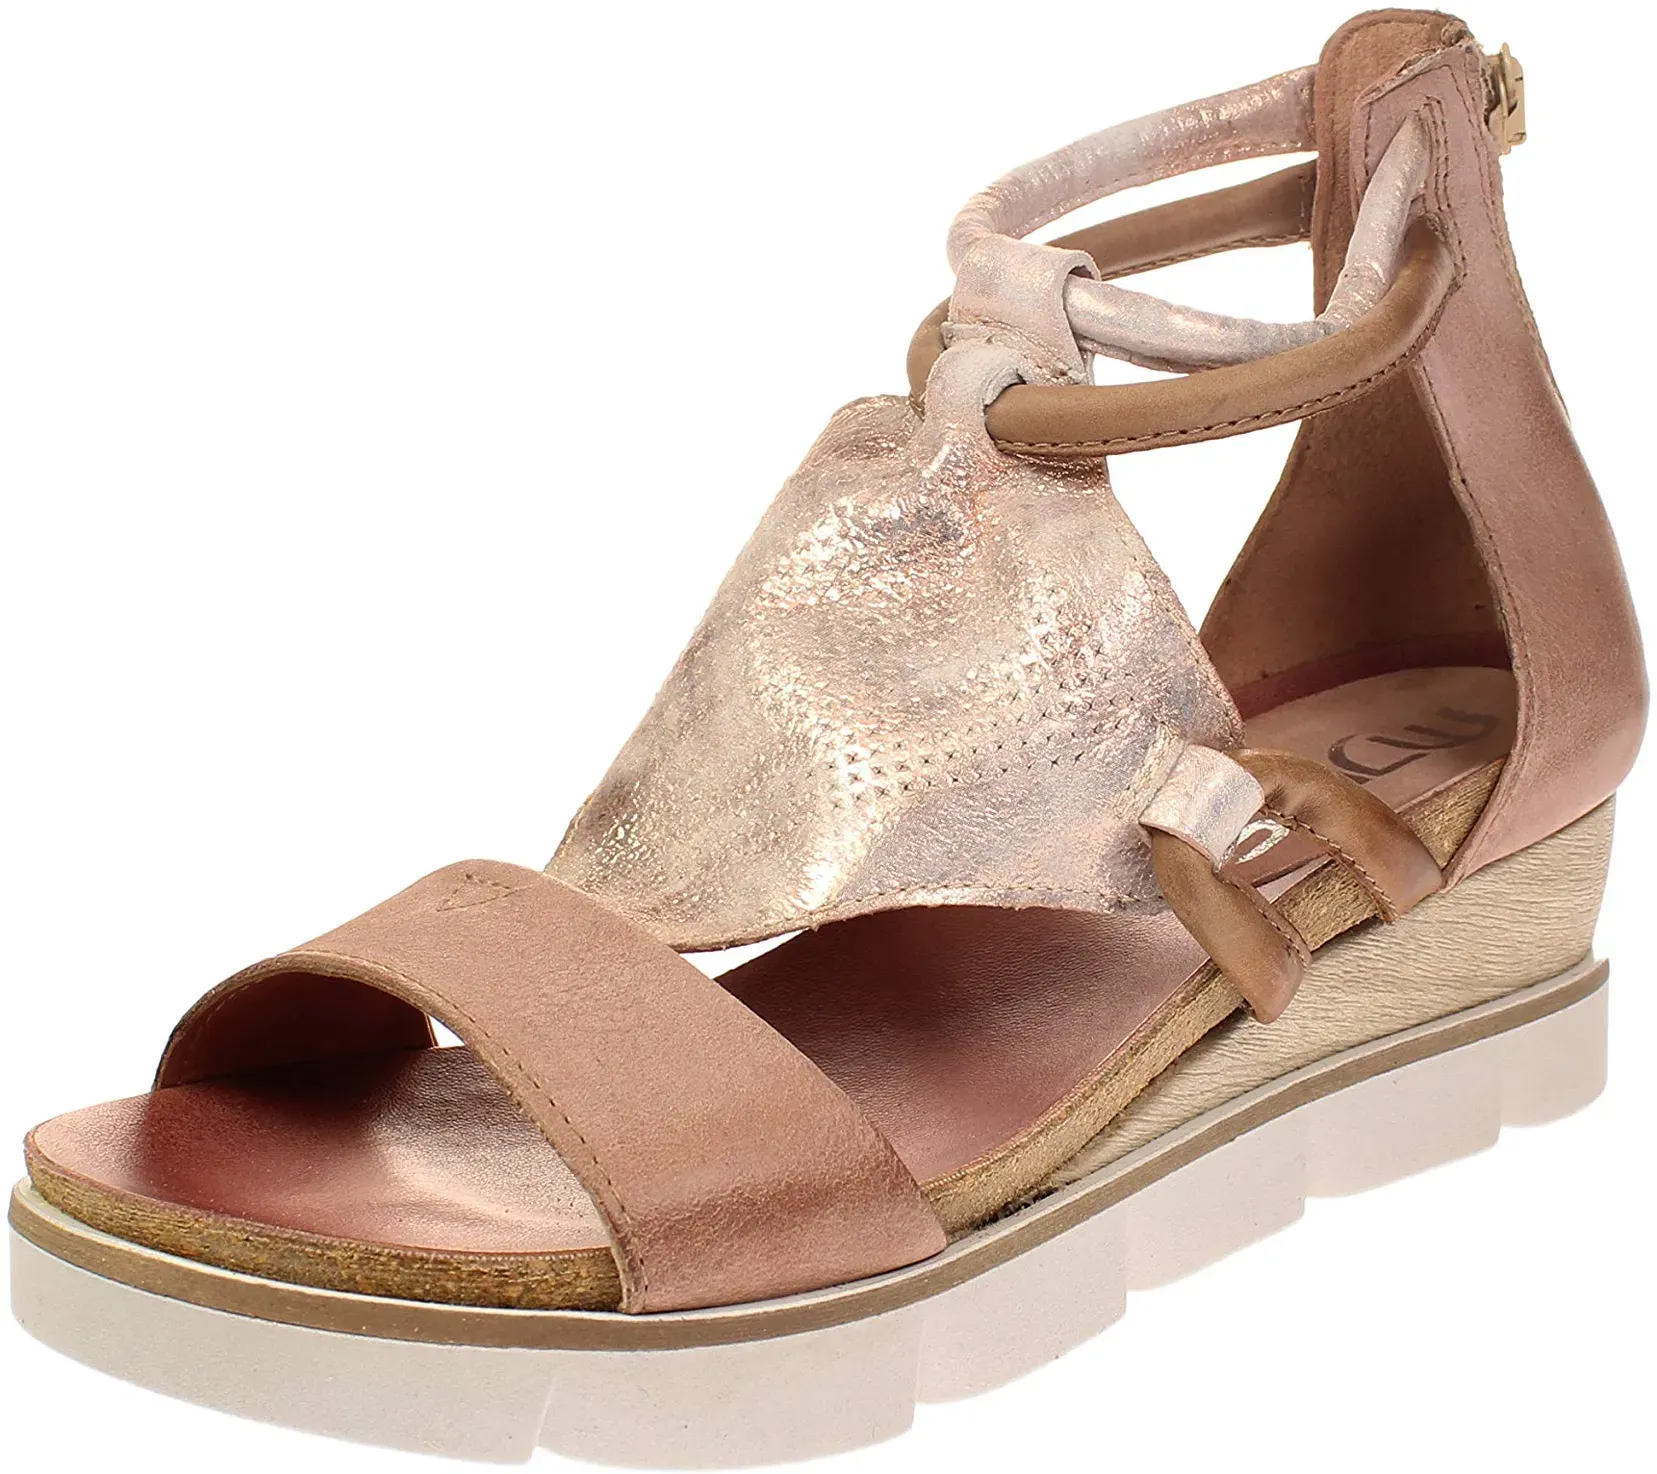 Mjus 866002-201-0002 - Damen Schuhe Sandaletten - perla-rosa, Größe:38 EU - 38 EU